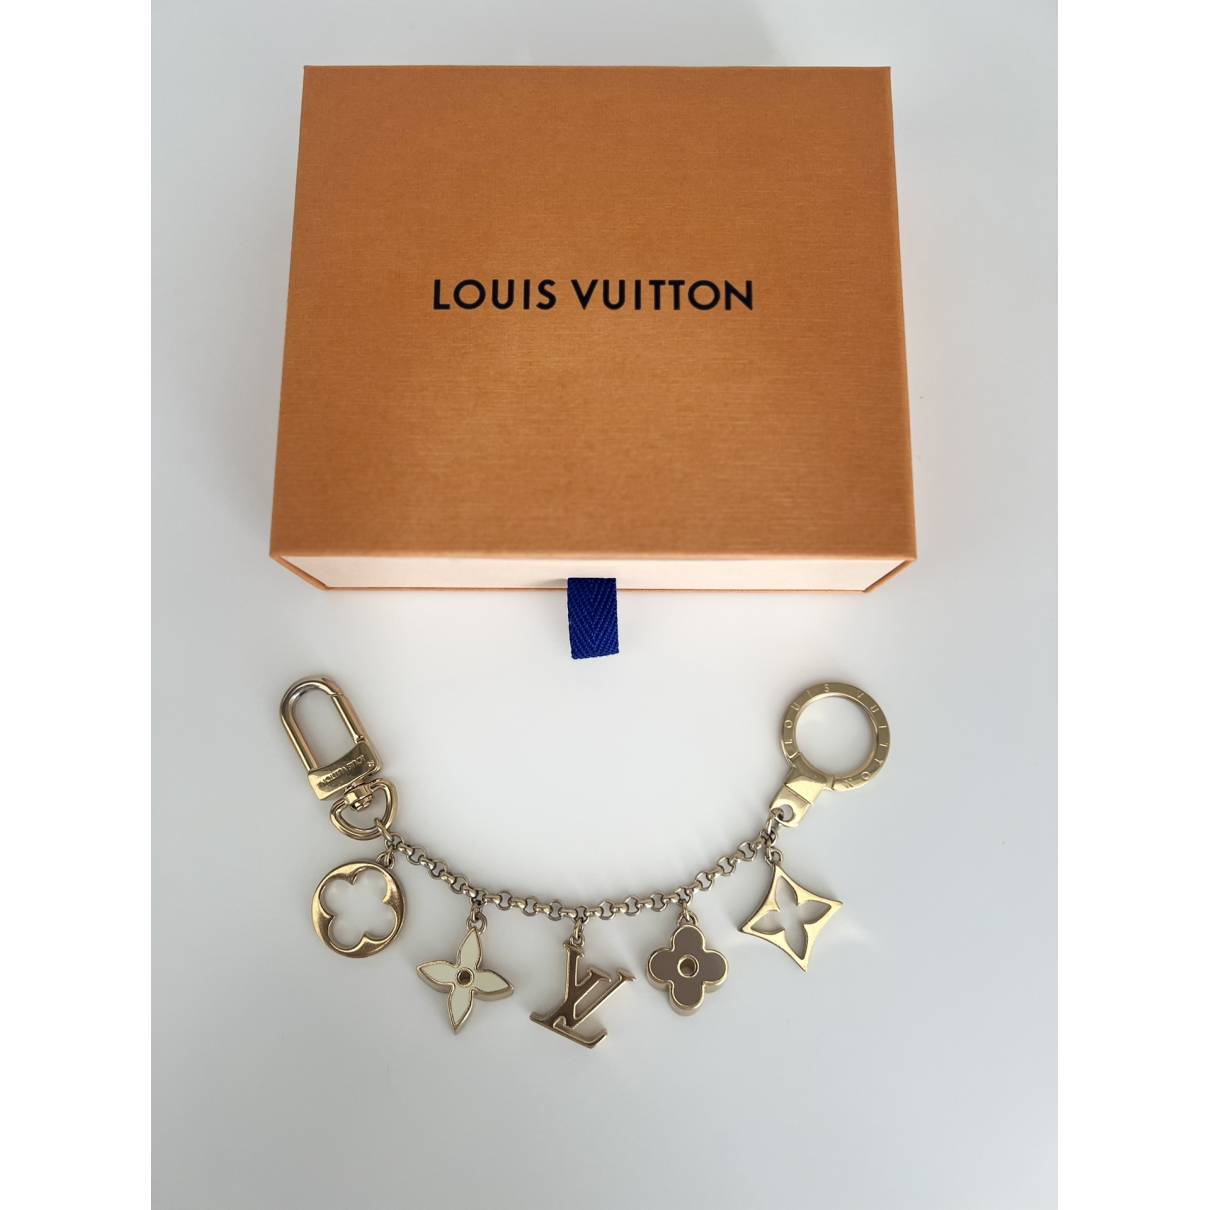 Louis Vuitton Louis Vuitton Fleur de Monogram Bag Charm Chain